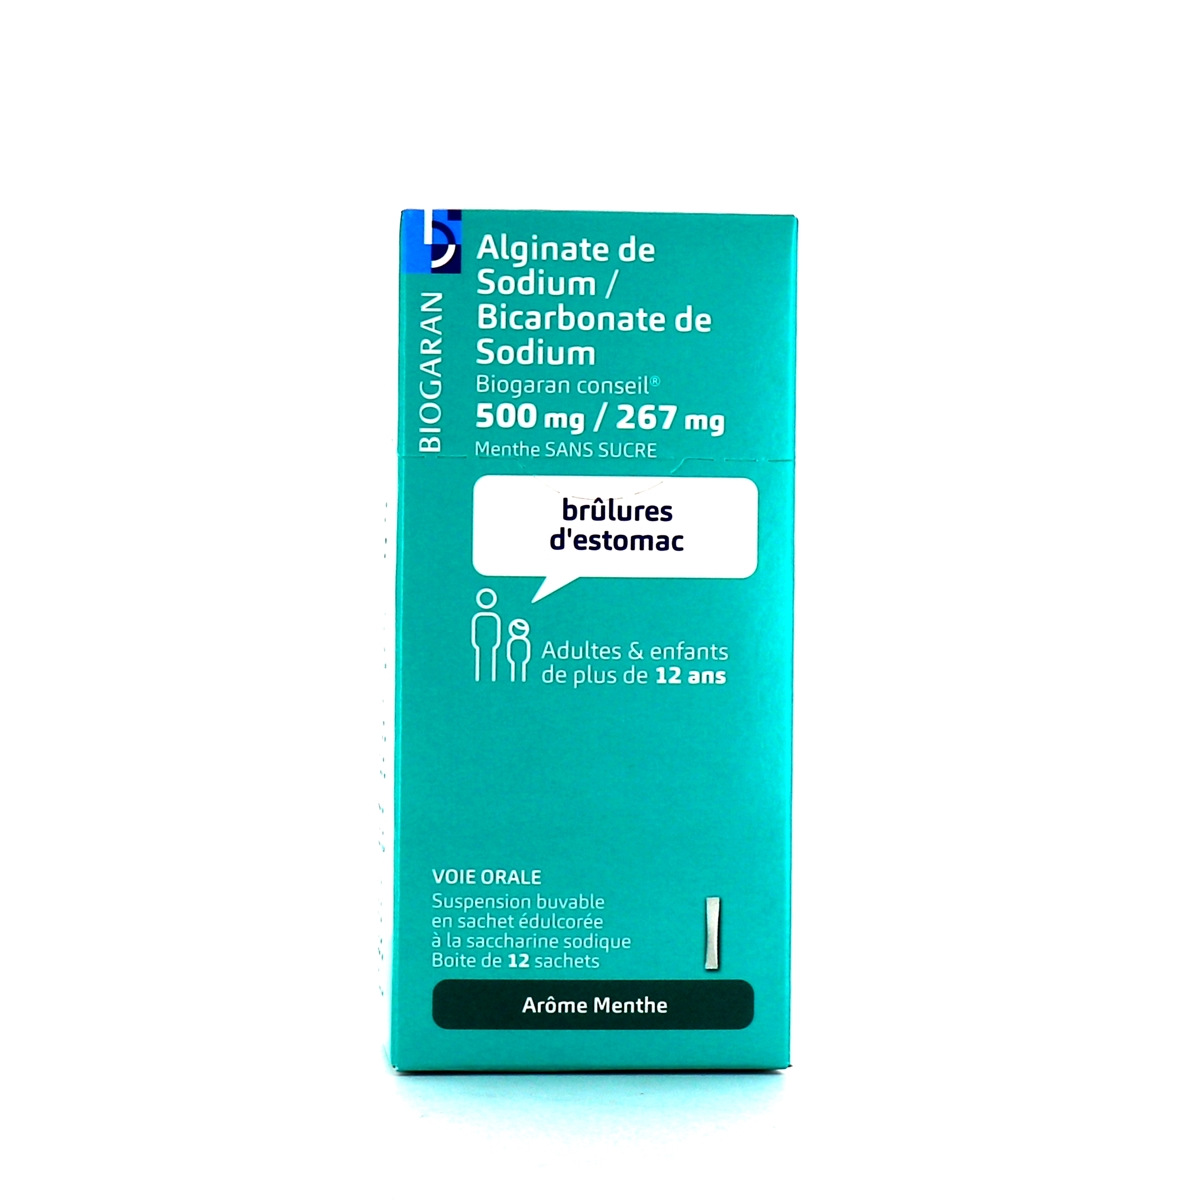 La pharmacie rolland : Bicarbonate de Sodium boîte 250g